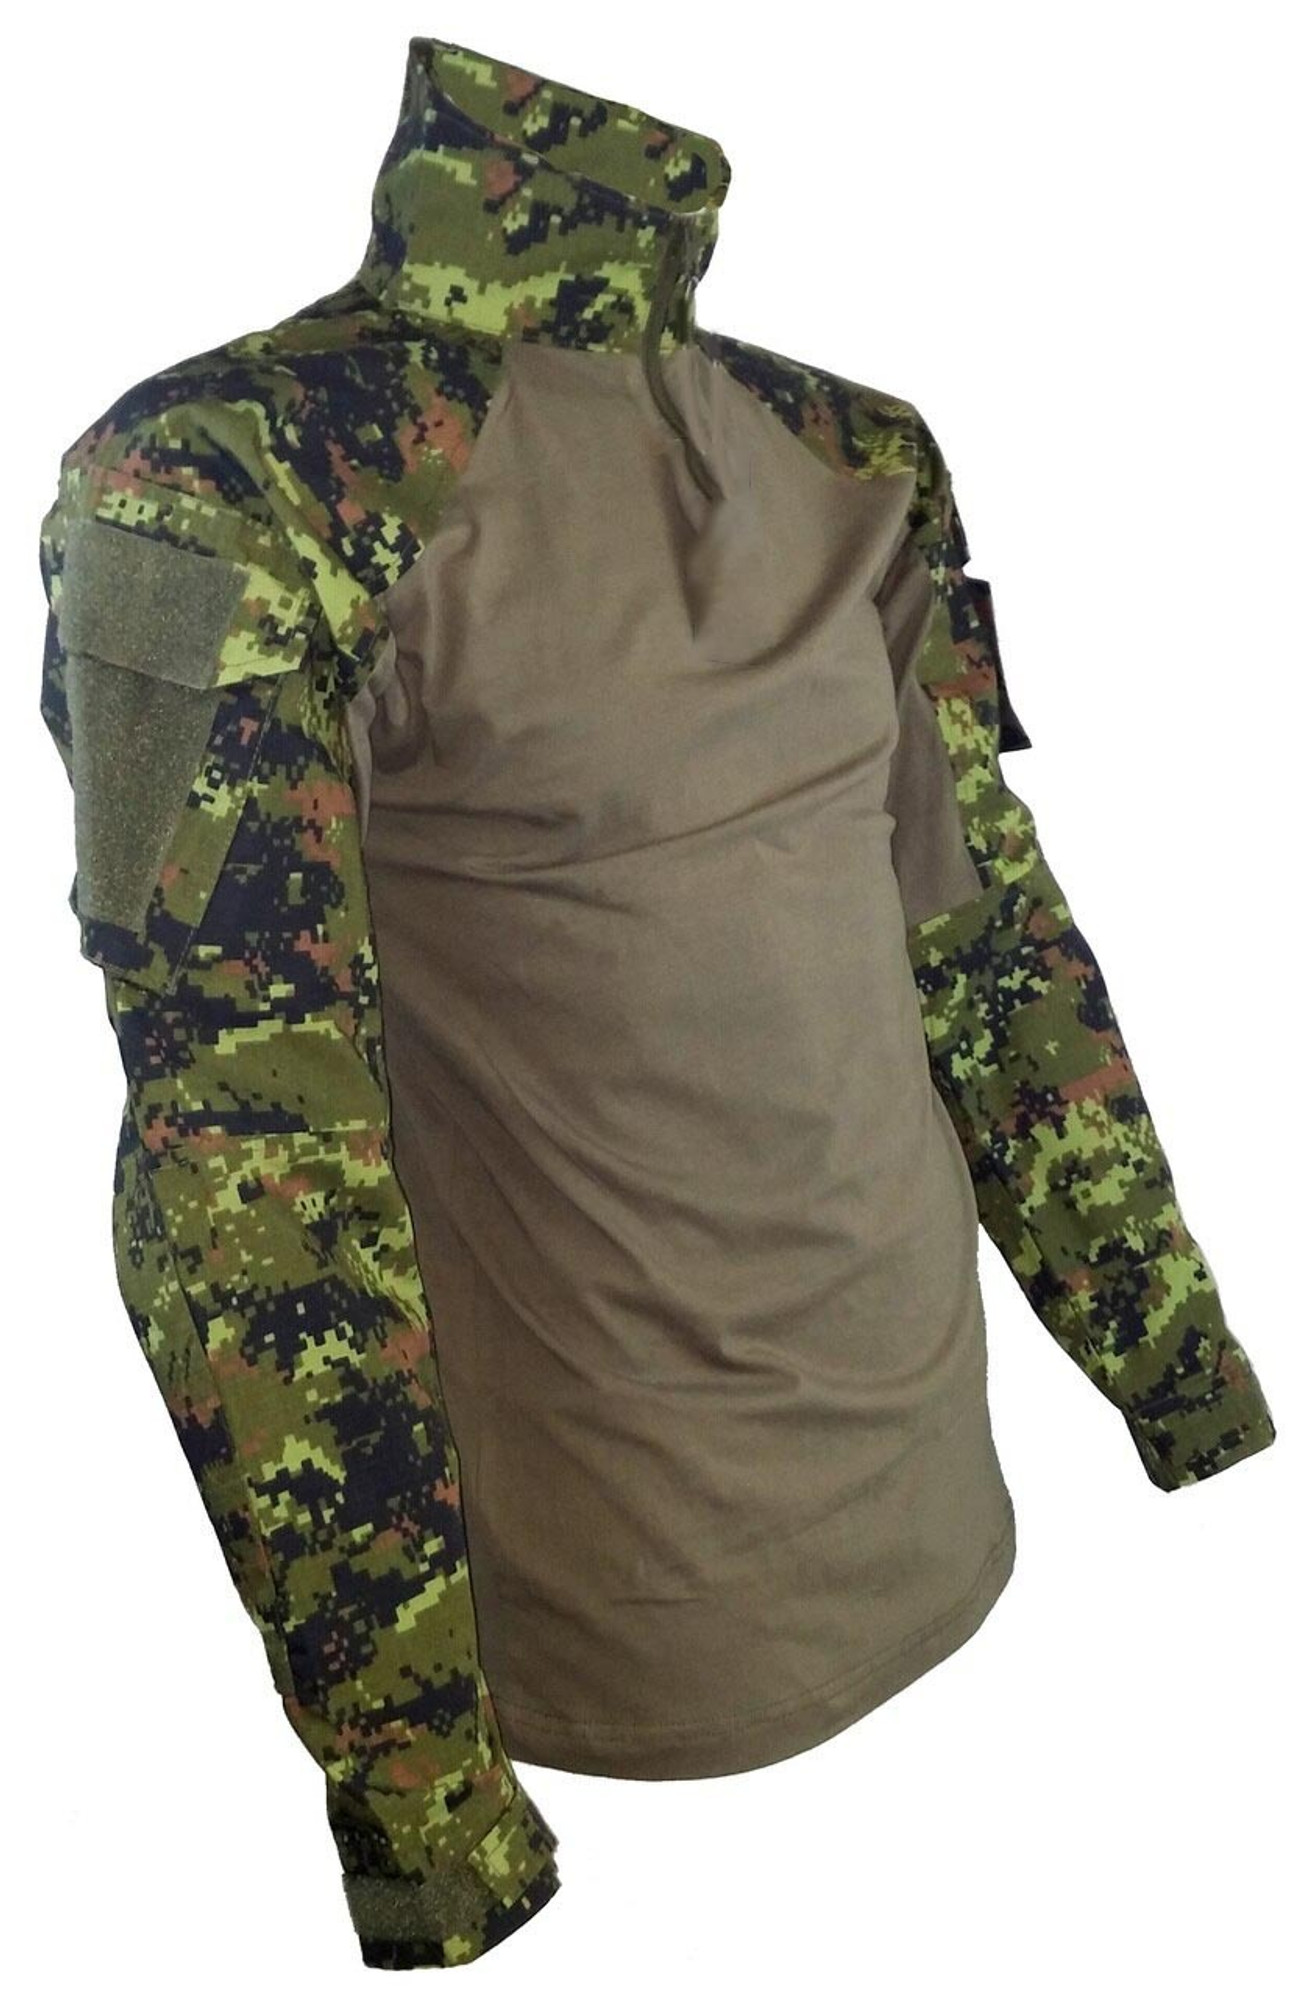 OTW Combat Shirt - Canadian Digital Pattern